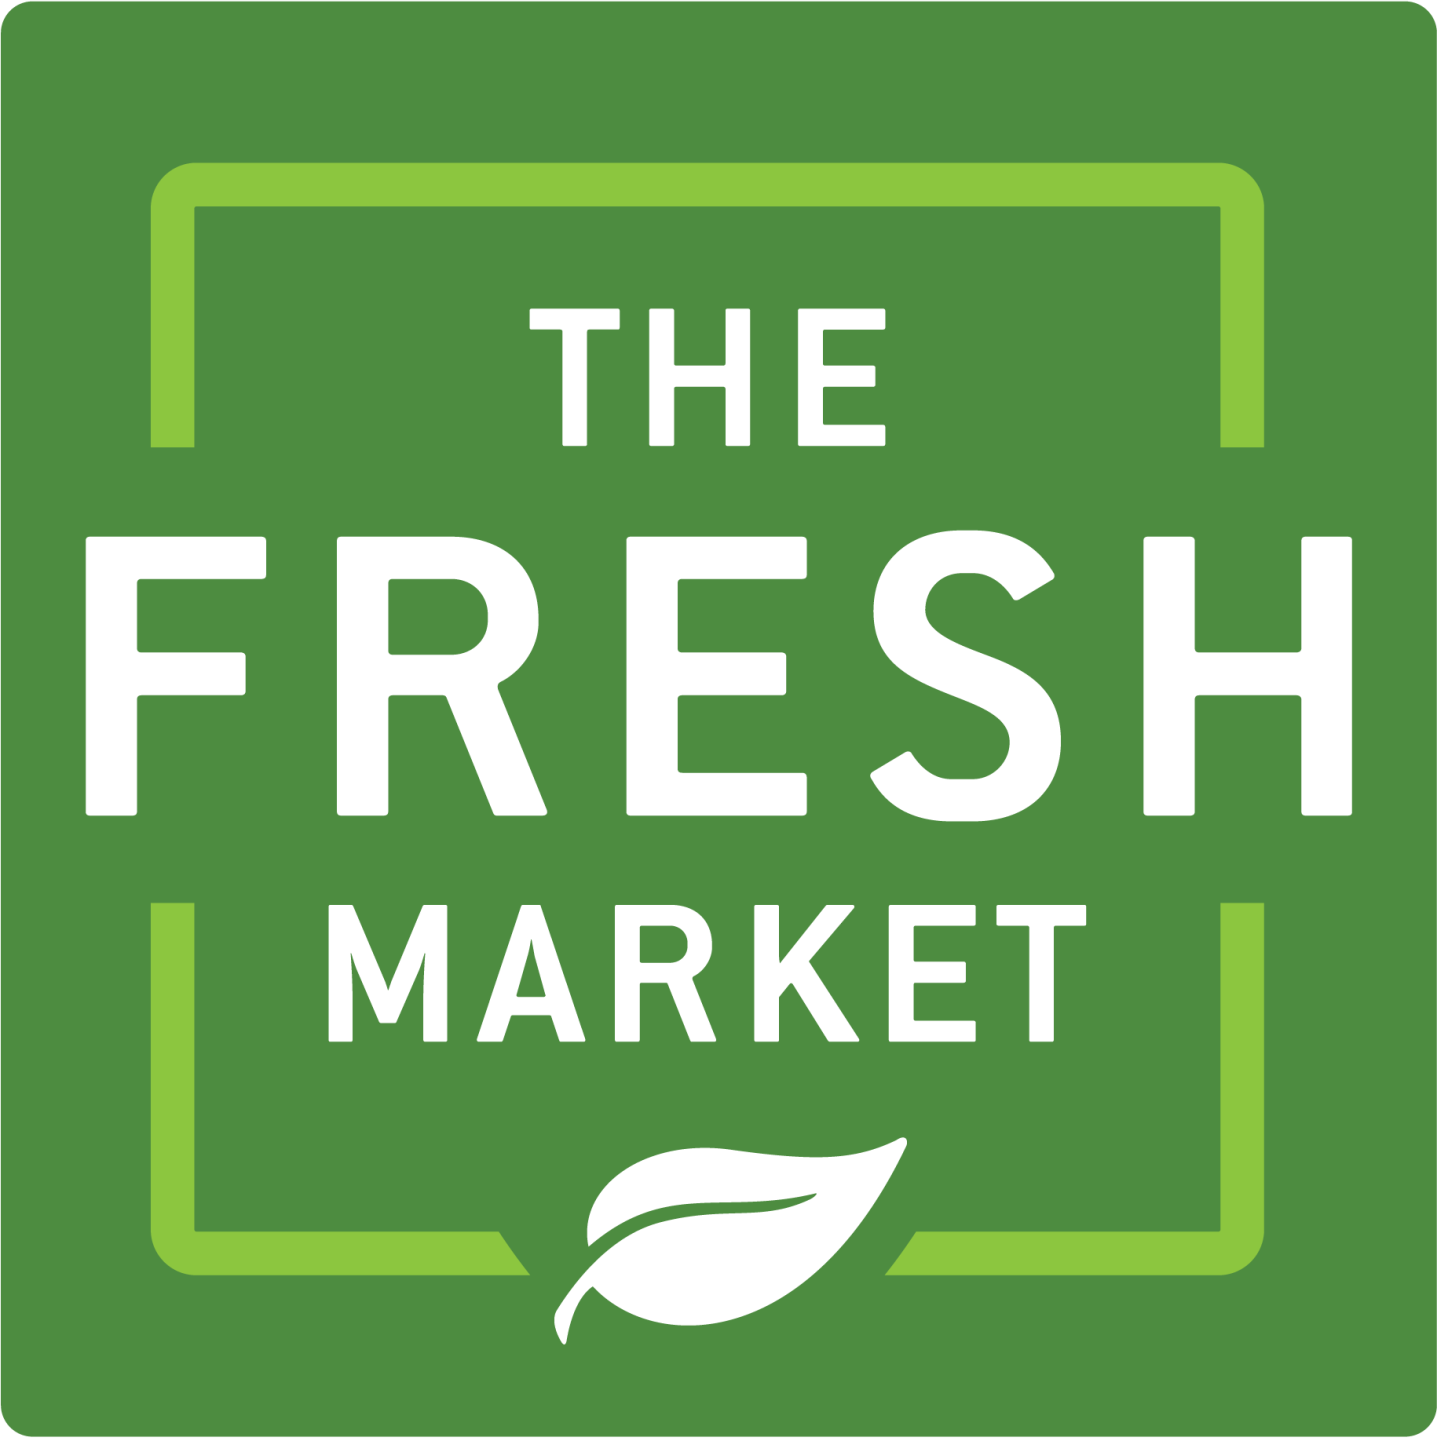 market fresh